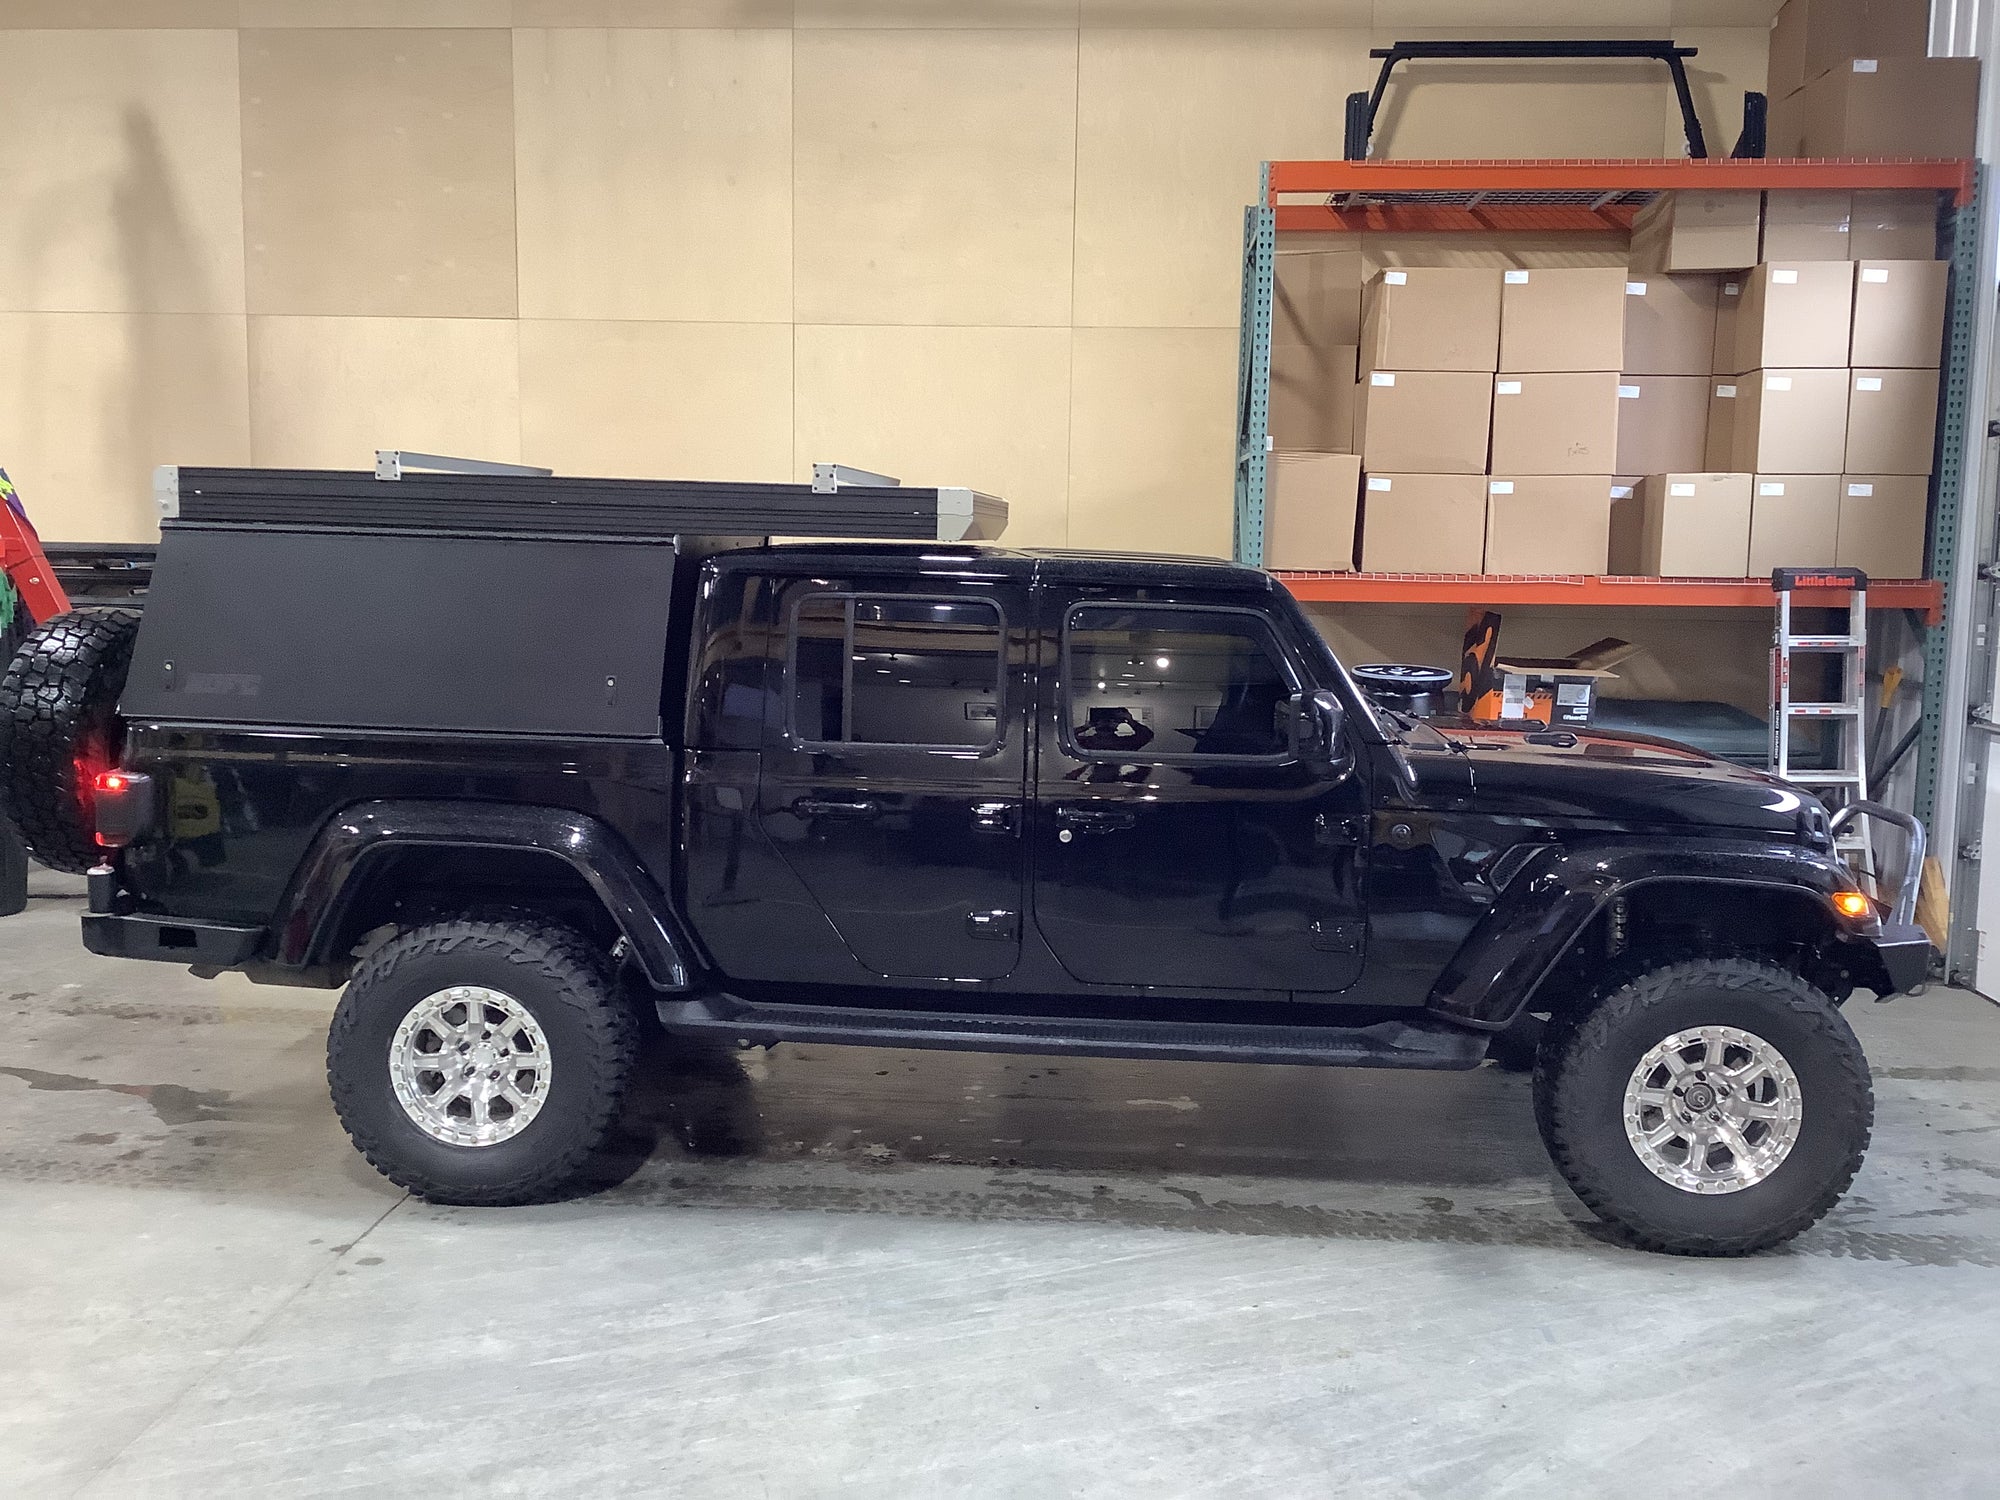 2021 Jeep Gladiator Camper - Build #3212